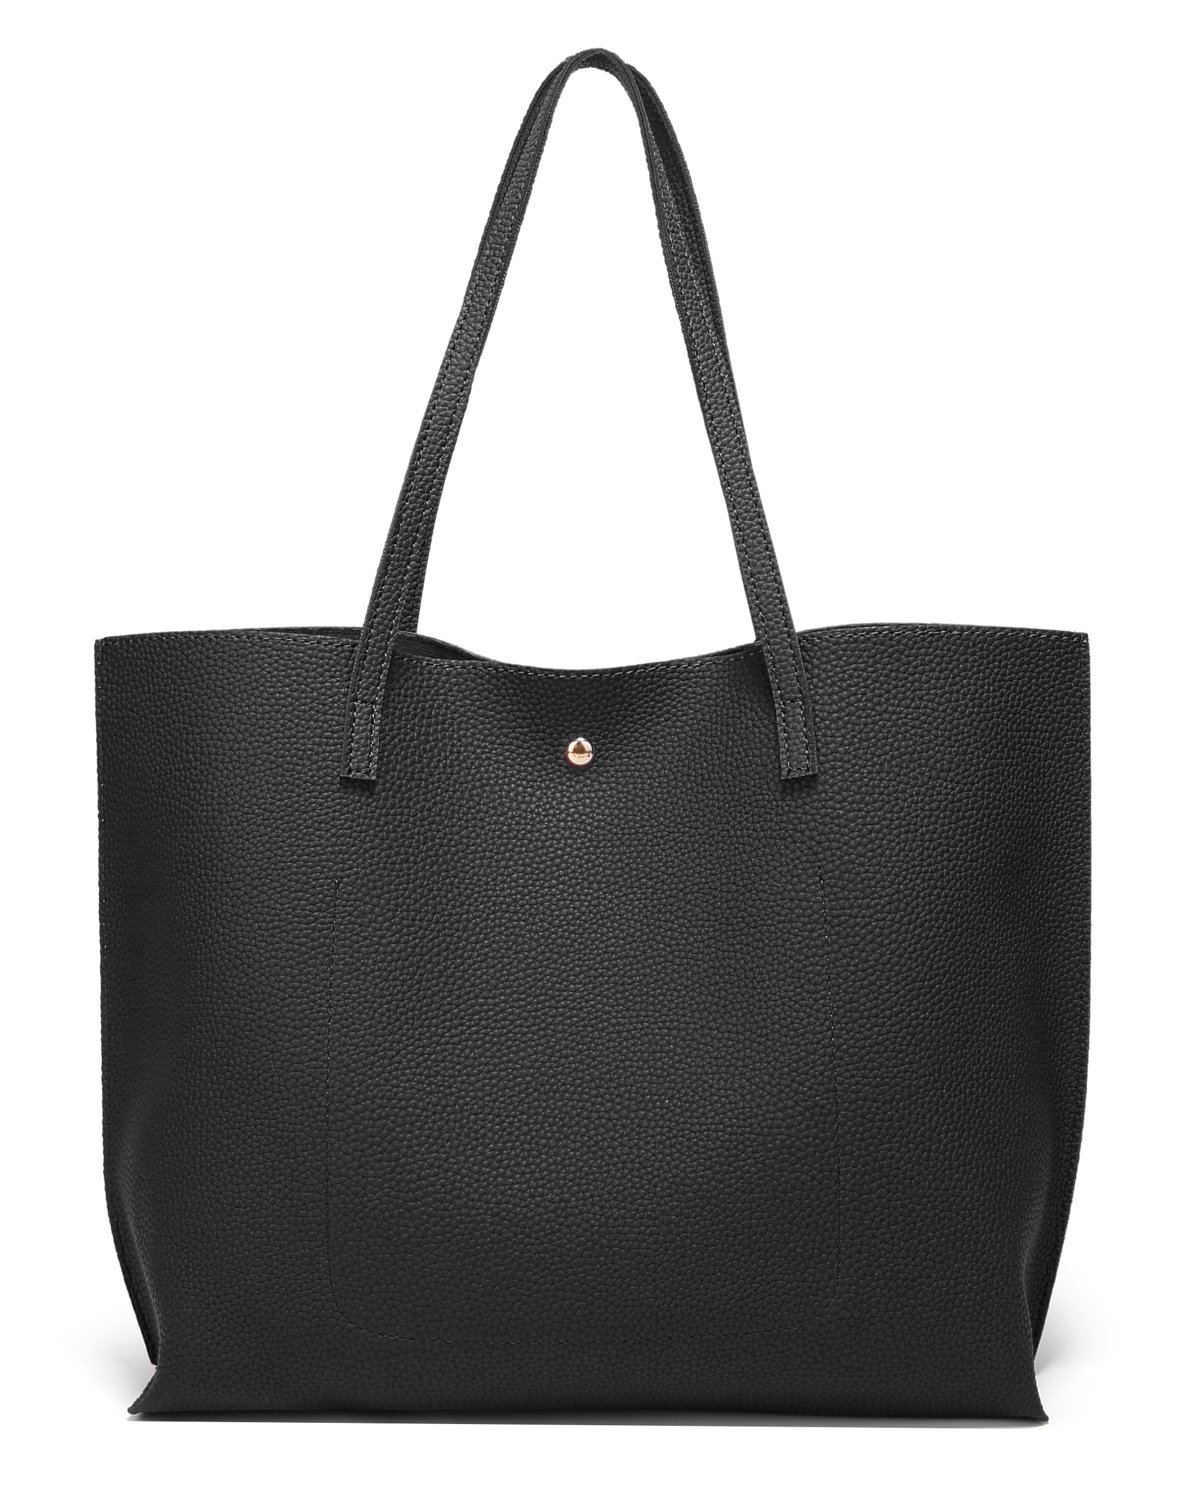 Dreubea Women's Soft Faux Leather Tote Shoulder Bag from, Big Capacity Tassel Handbag